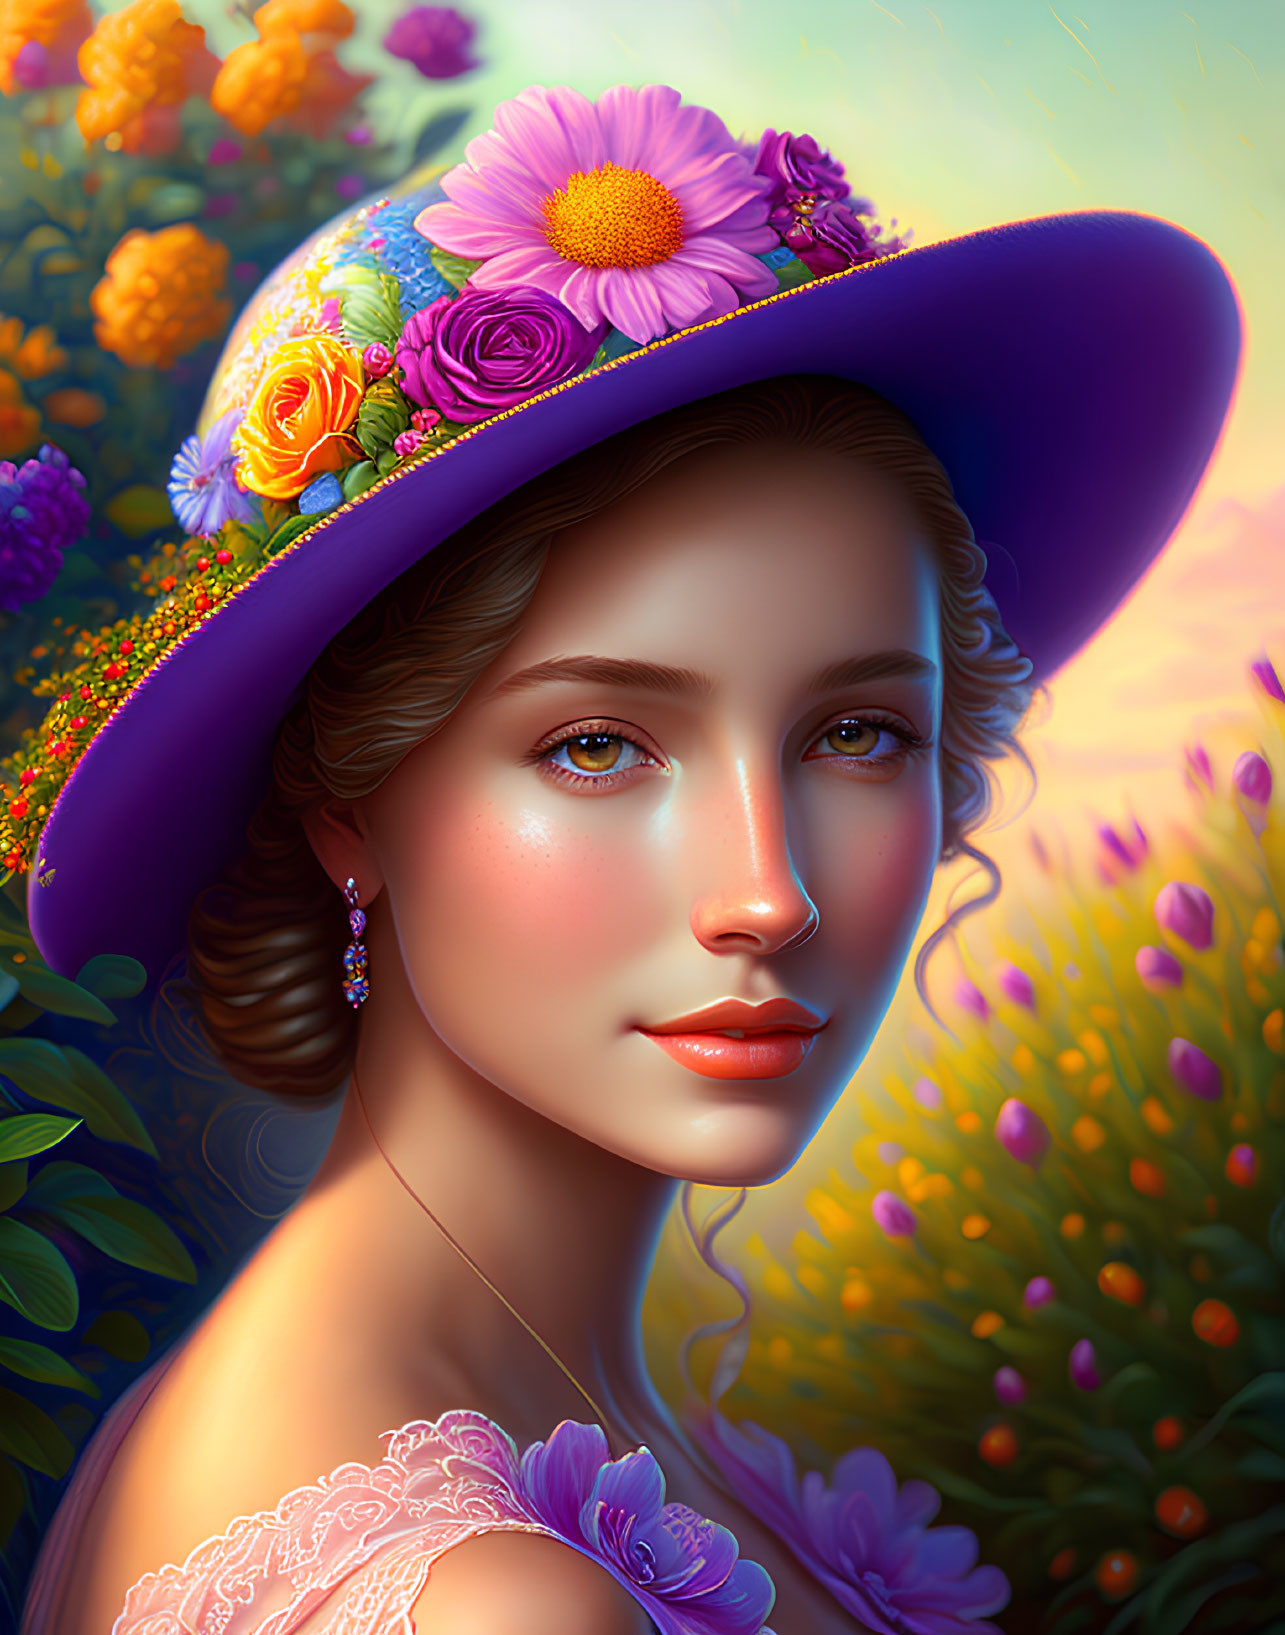 Woman portrait with floral hat against serene backdrop